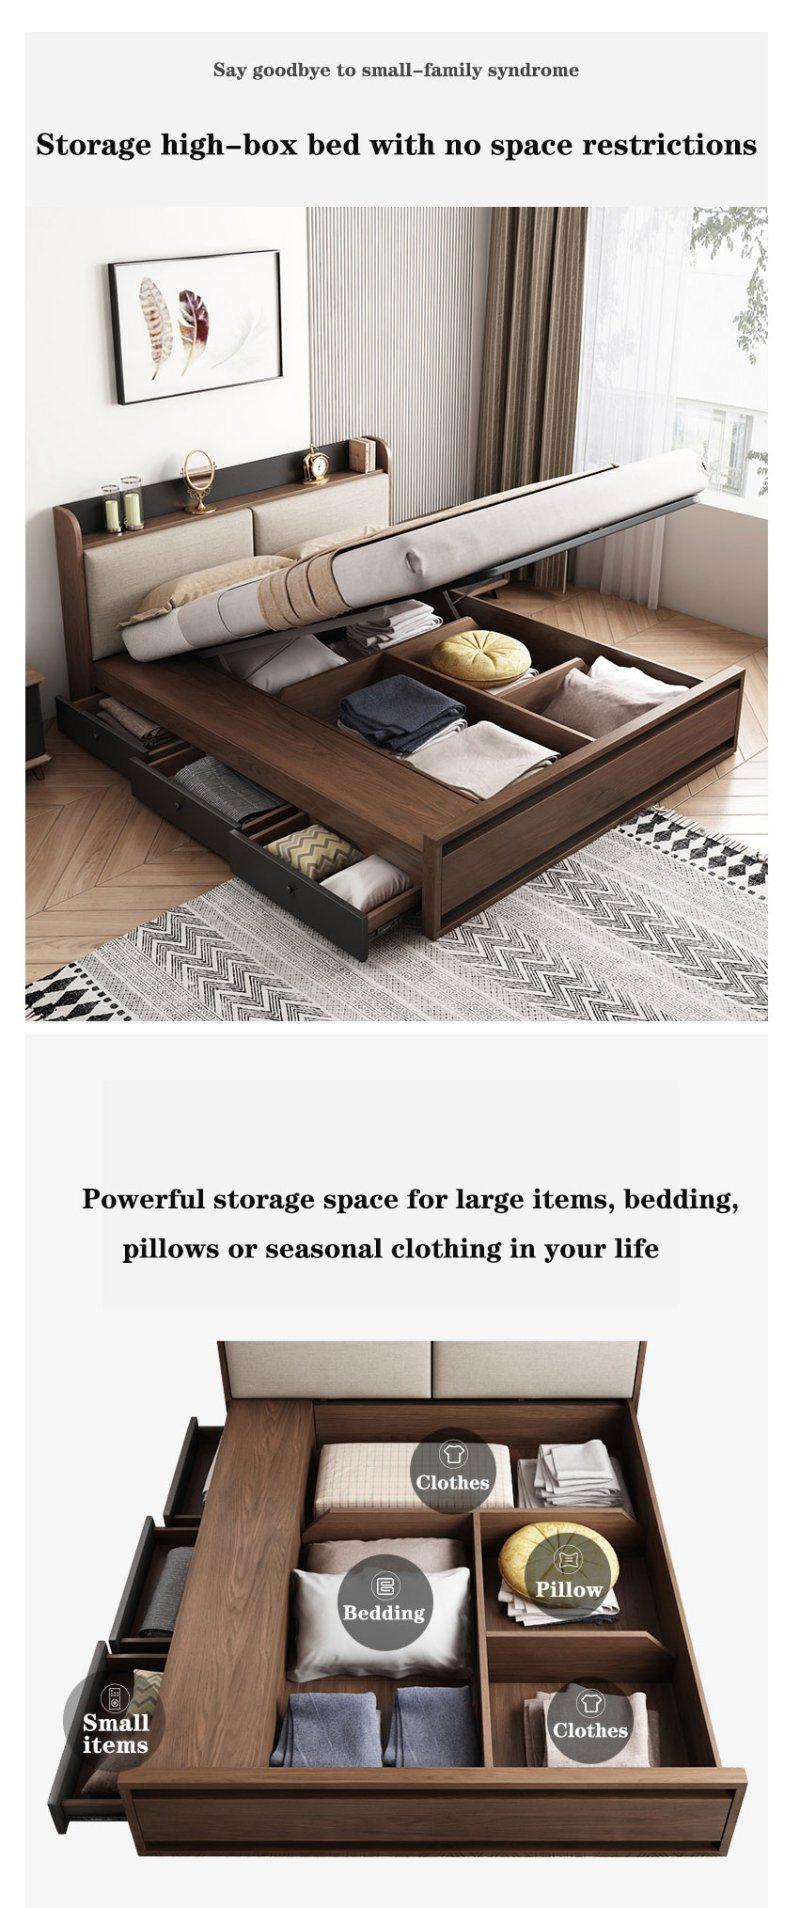 Multifunctional Modern Melamine MDF Wood Home Bedroom Furniture Set Double King Size Hotel Bed